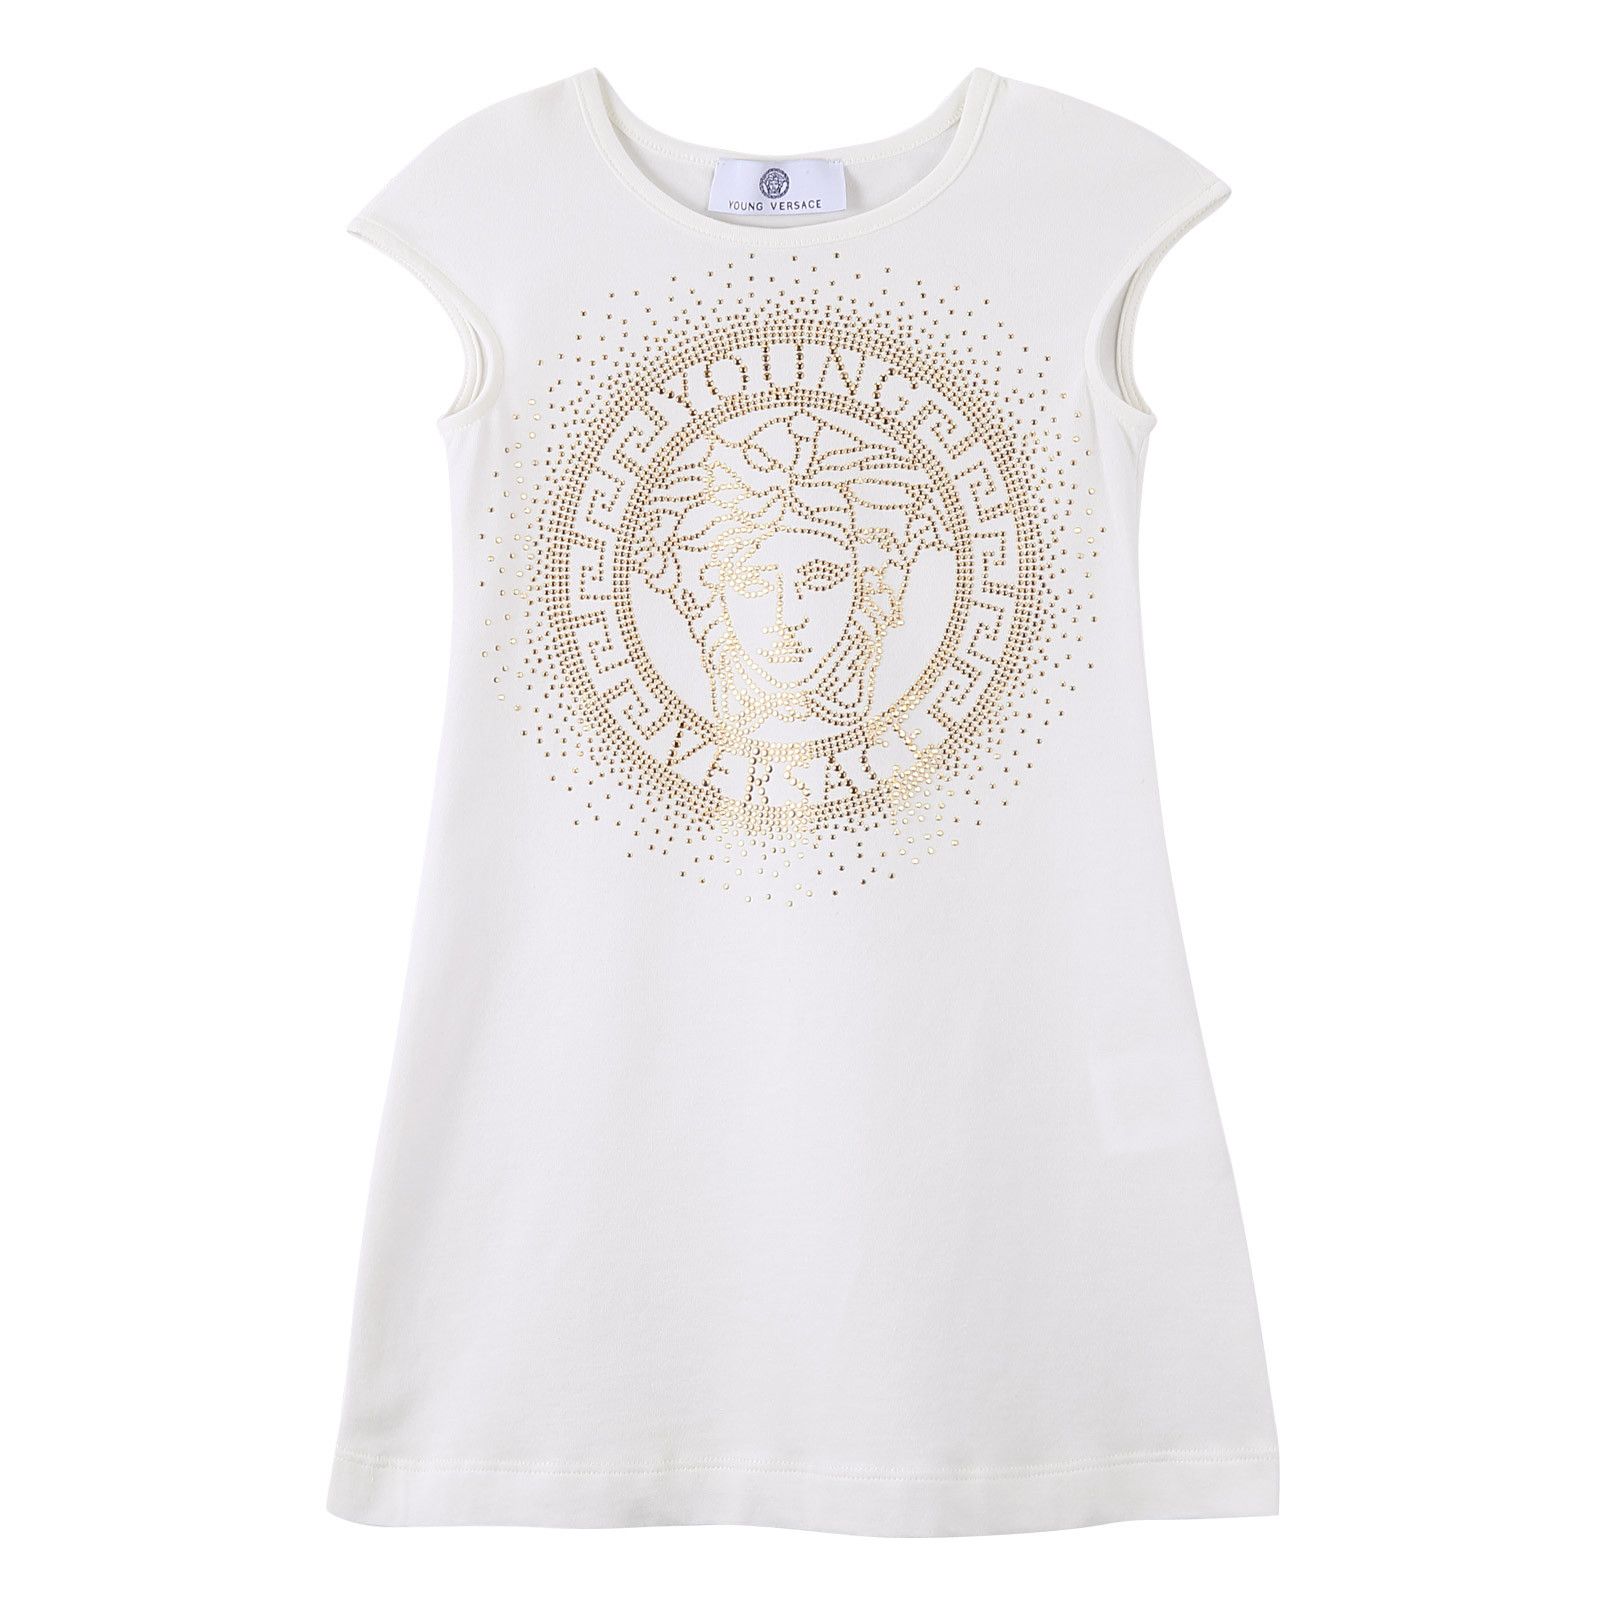 Girls White Cotton Dress With Gold Rhinestone Logo - CÉMAROSE | Children's Fashion Store - 1